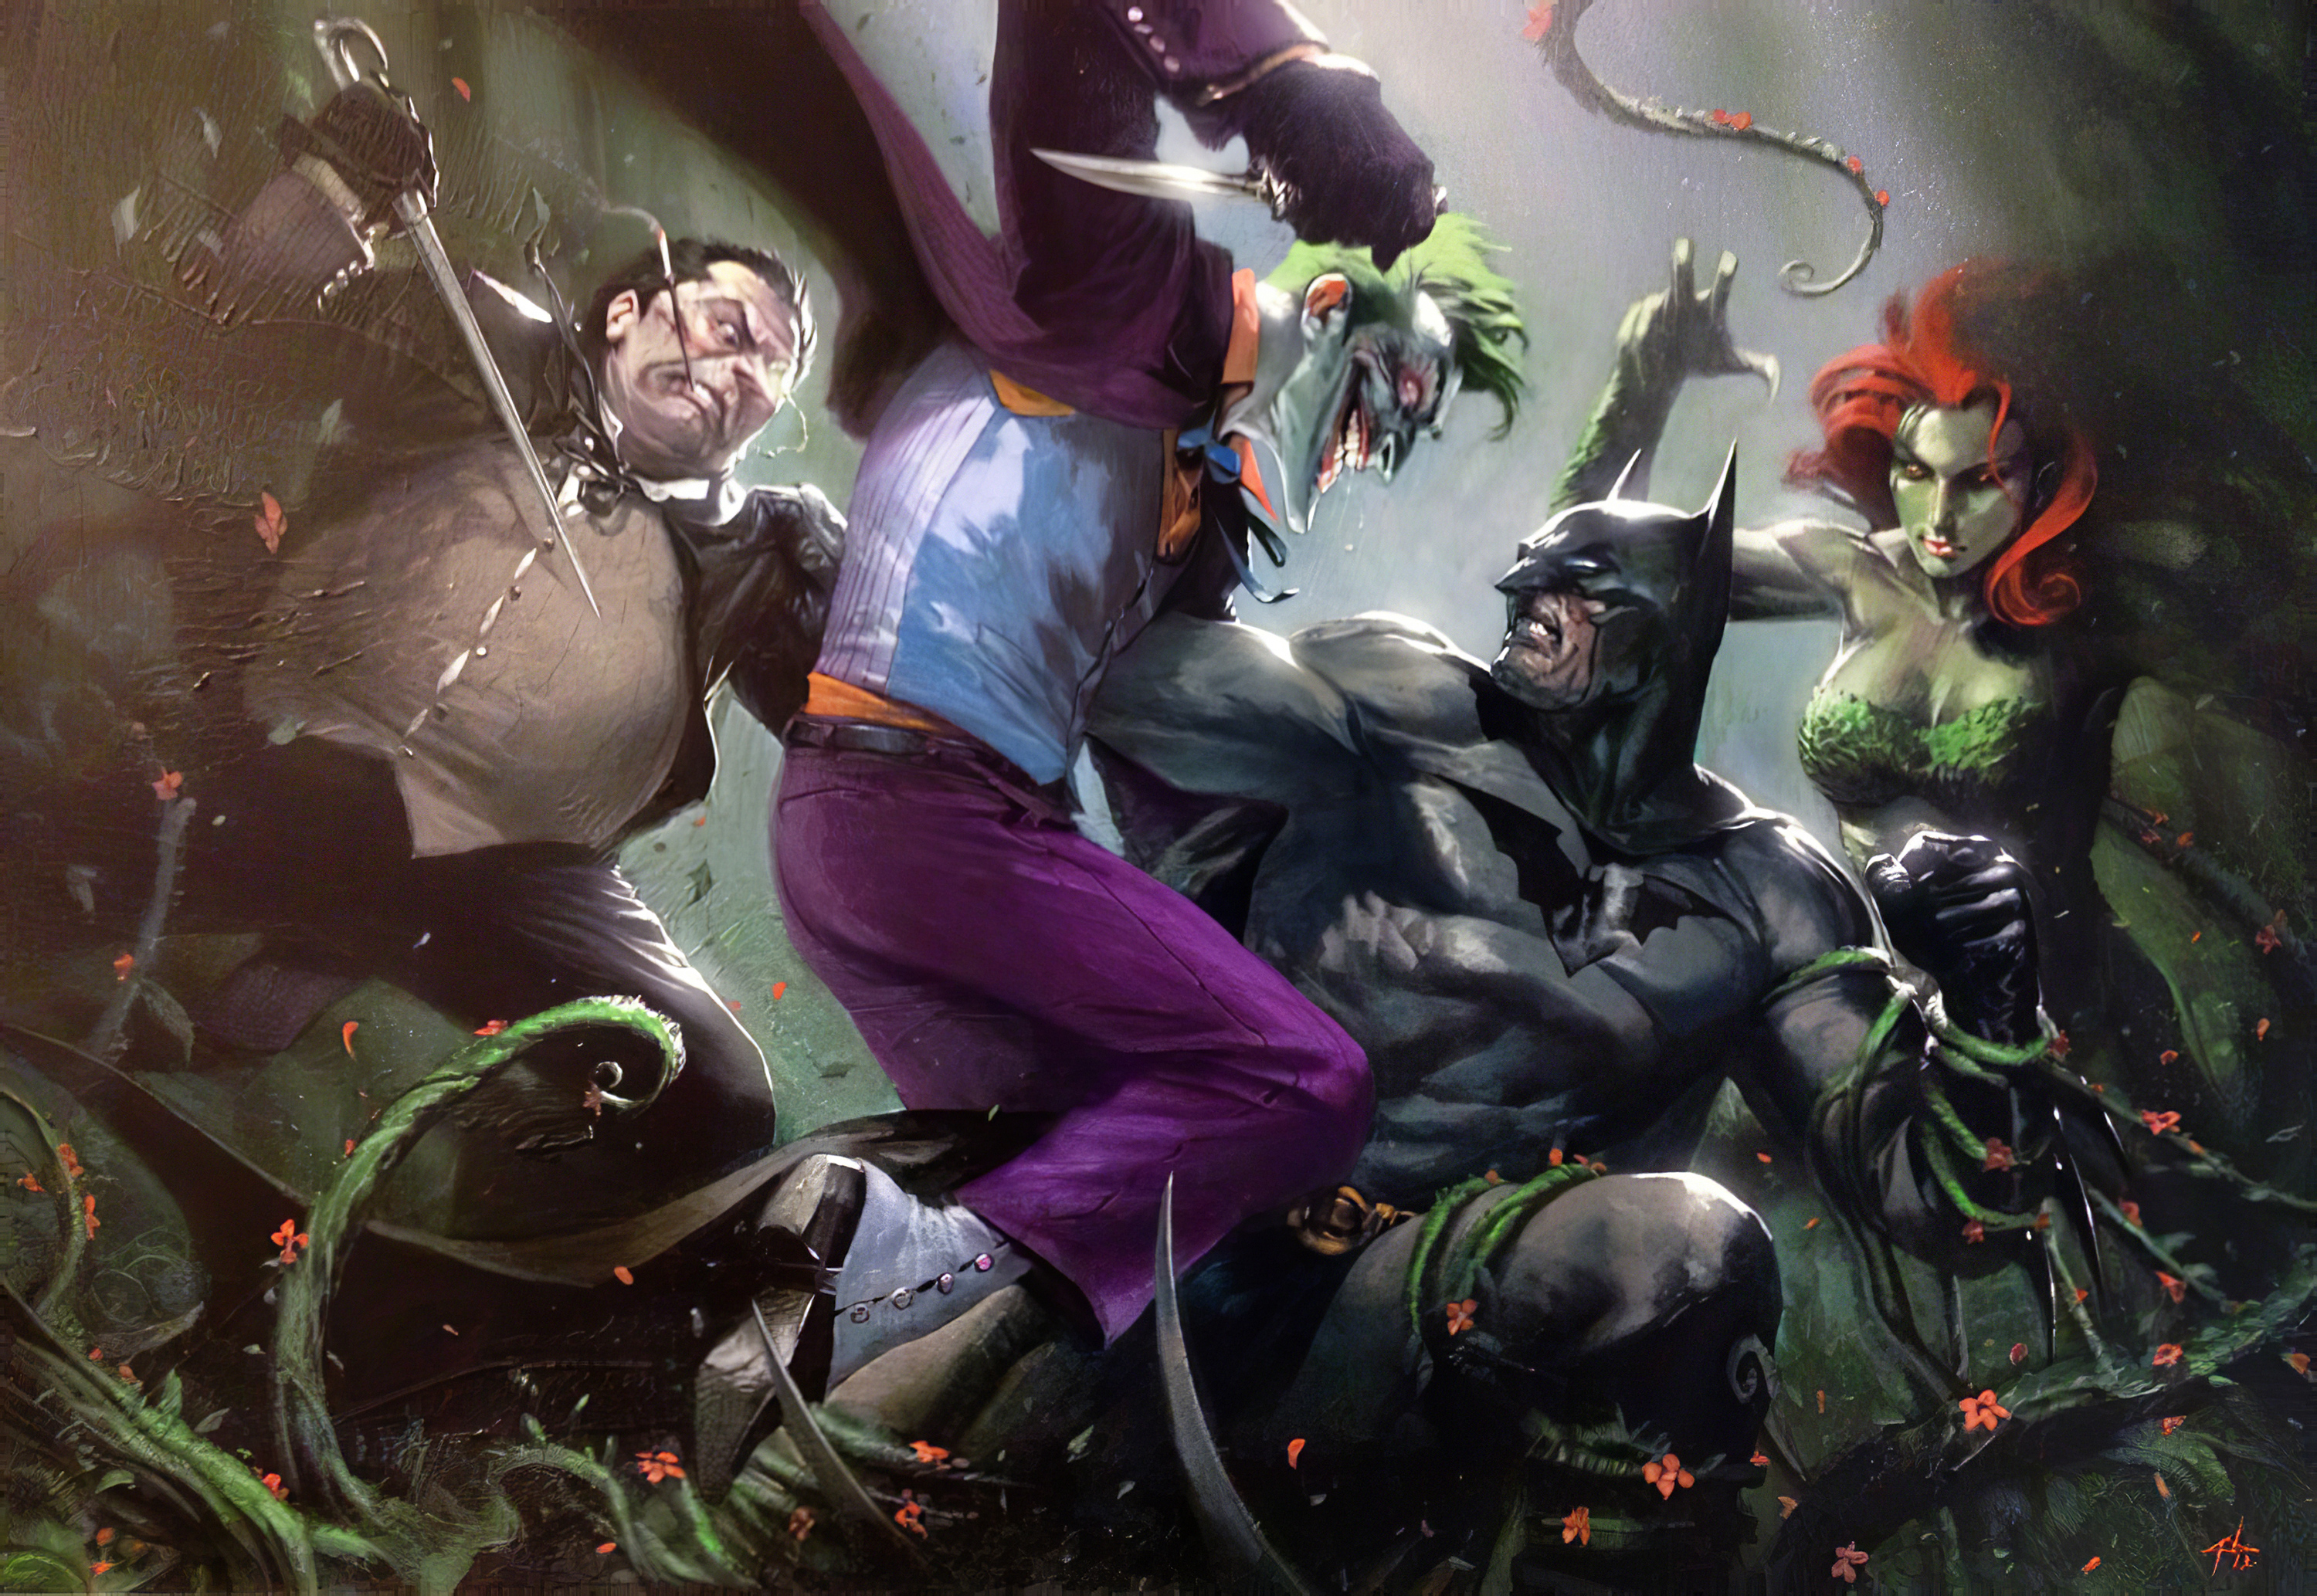 Скачать обои бесплатно Джокер, Комиксы, Бэтмен, Комиксы Dc, Ядовитый Плющ, Пингвин (Комиксы Dc) картинка на рабочий стол ПК